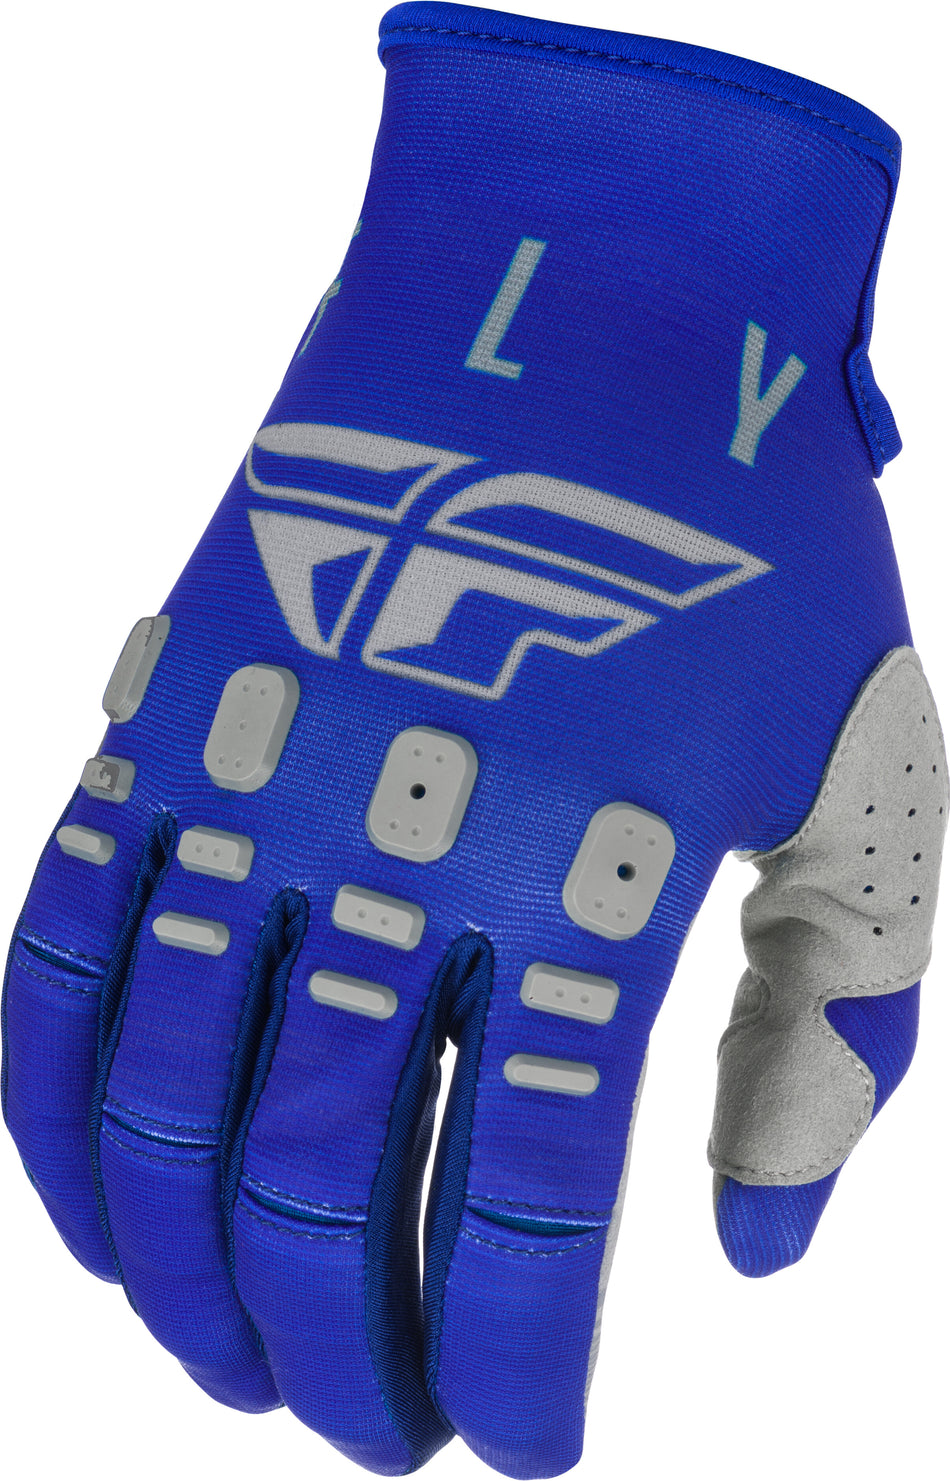 FLY RACING Kinetic K121 Gloves Blue/Navy/Grey Sz 12 374-41112